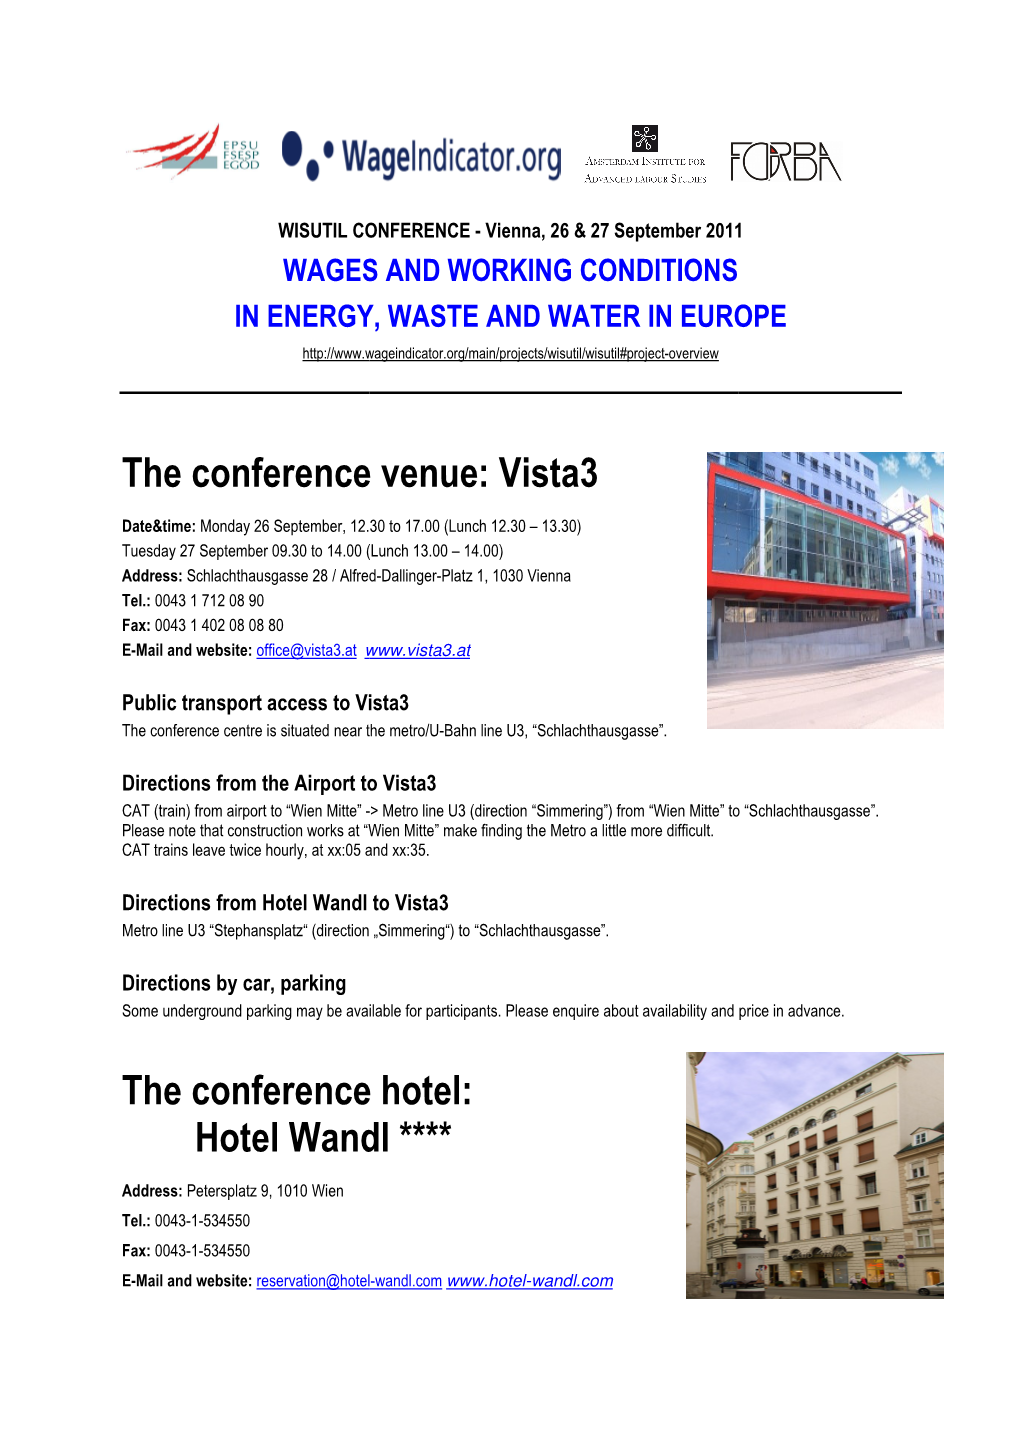 Vista3 E Conference Hotel: Wandl